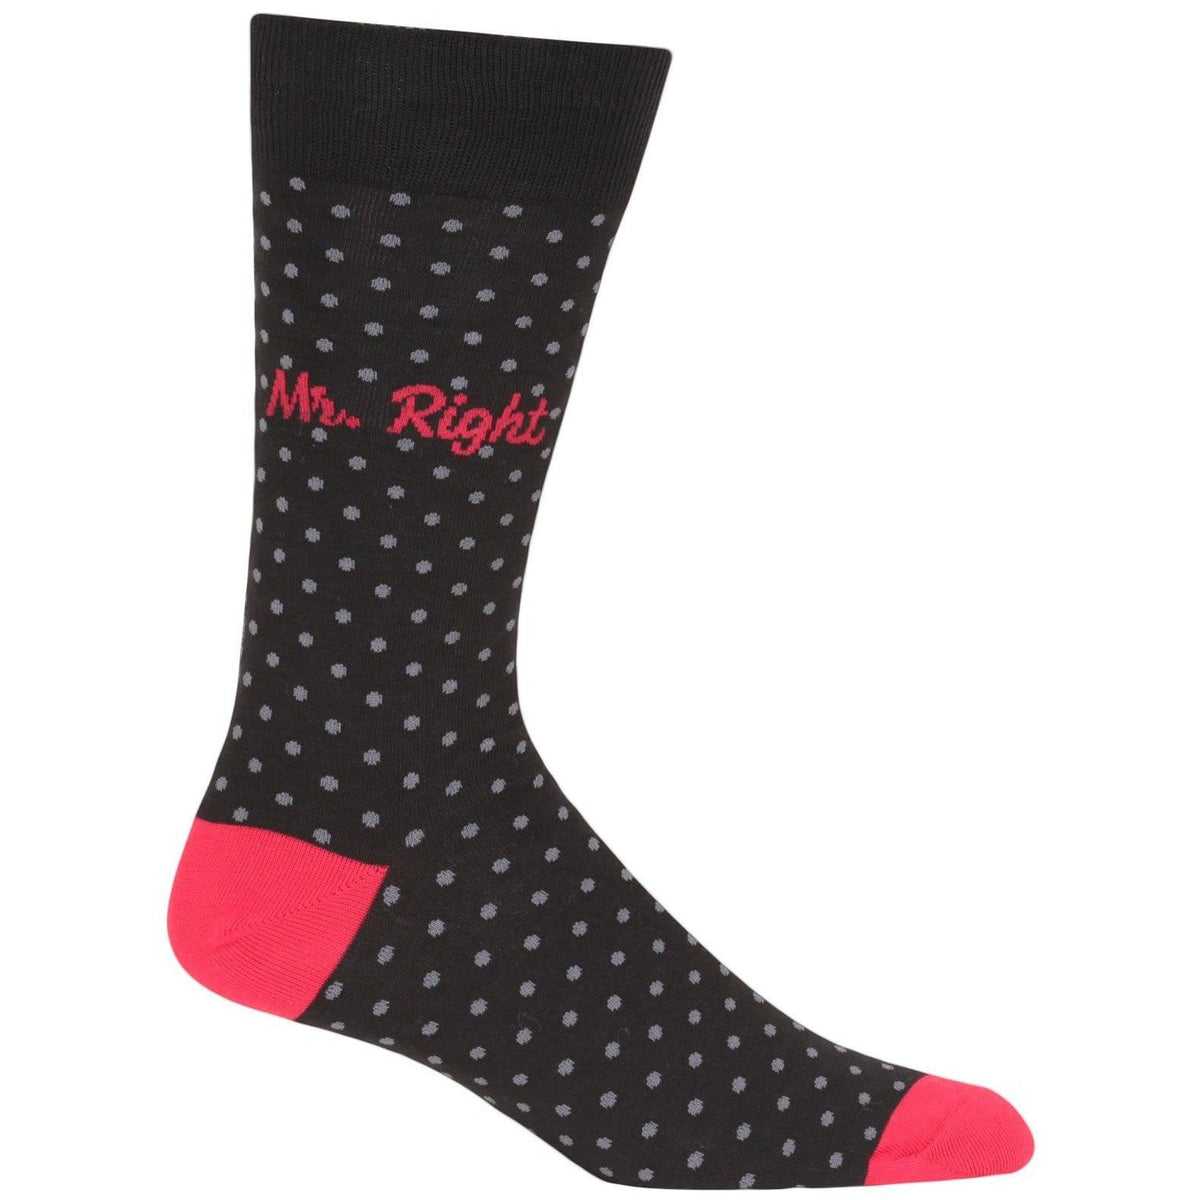 Mr. Right Men&#39;s Crew Socks Black and Red